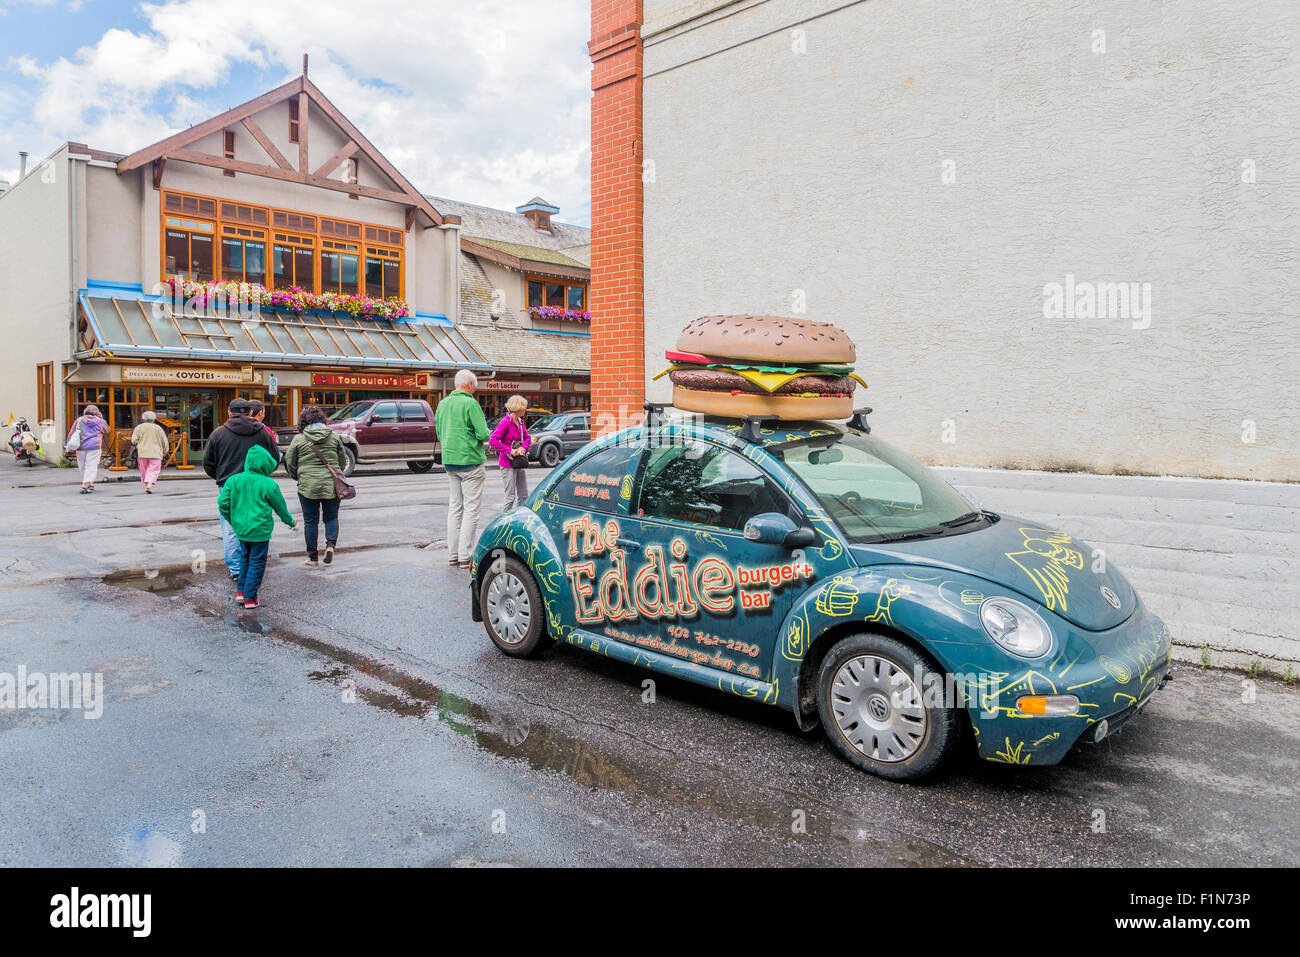 Eddie Burger delivery car, Banff, Alberta, Canada Stock Photo